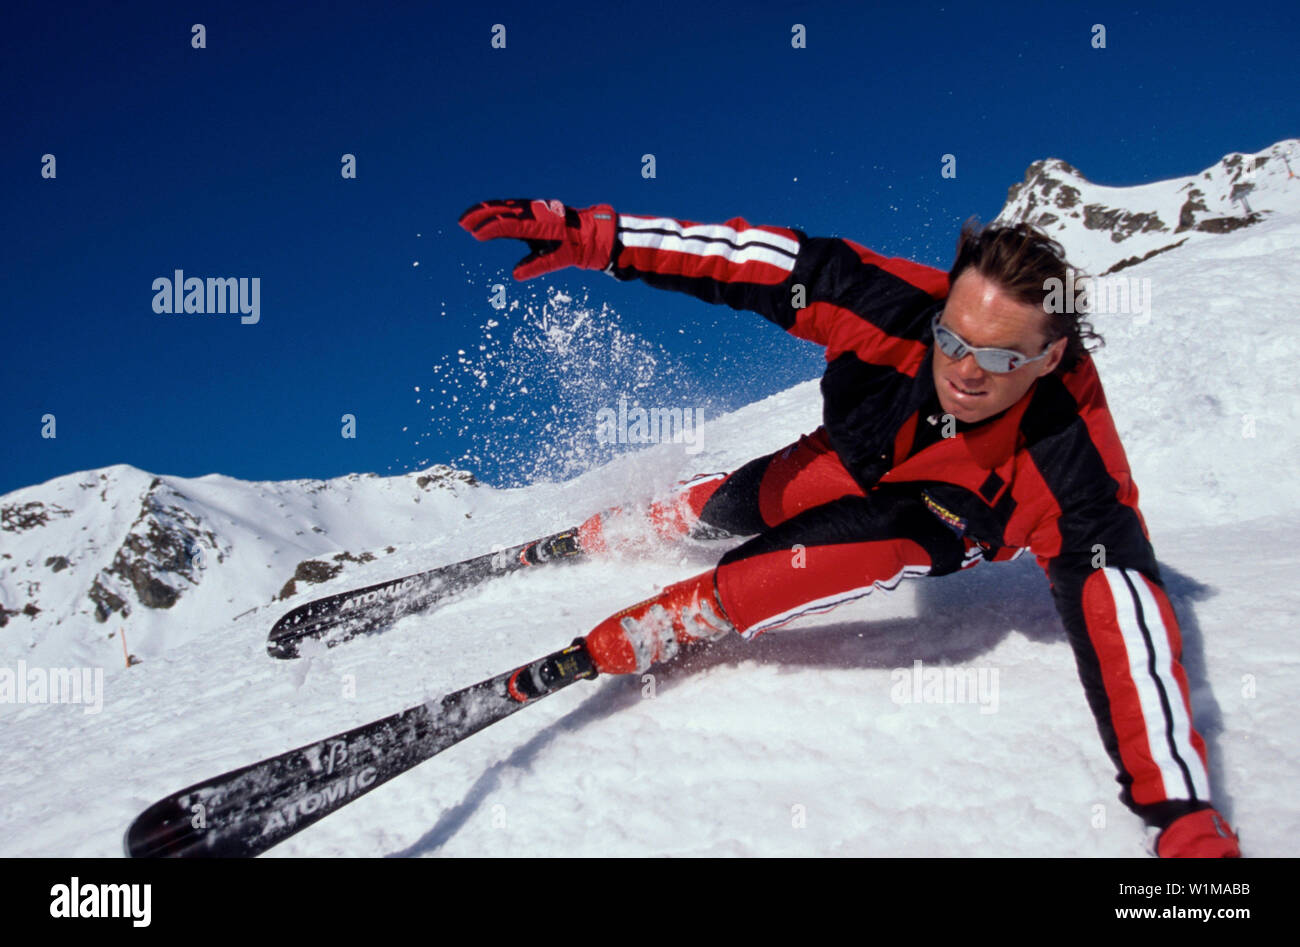 Ski, Carving extrem, Sports Stock Photo: 259217375 - Alamy